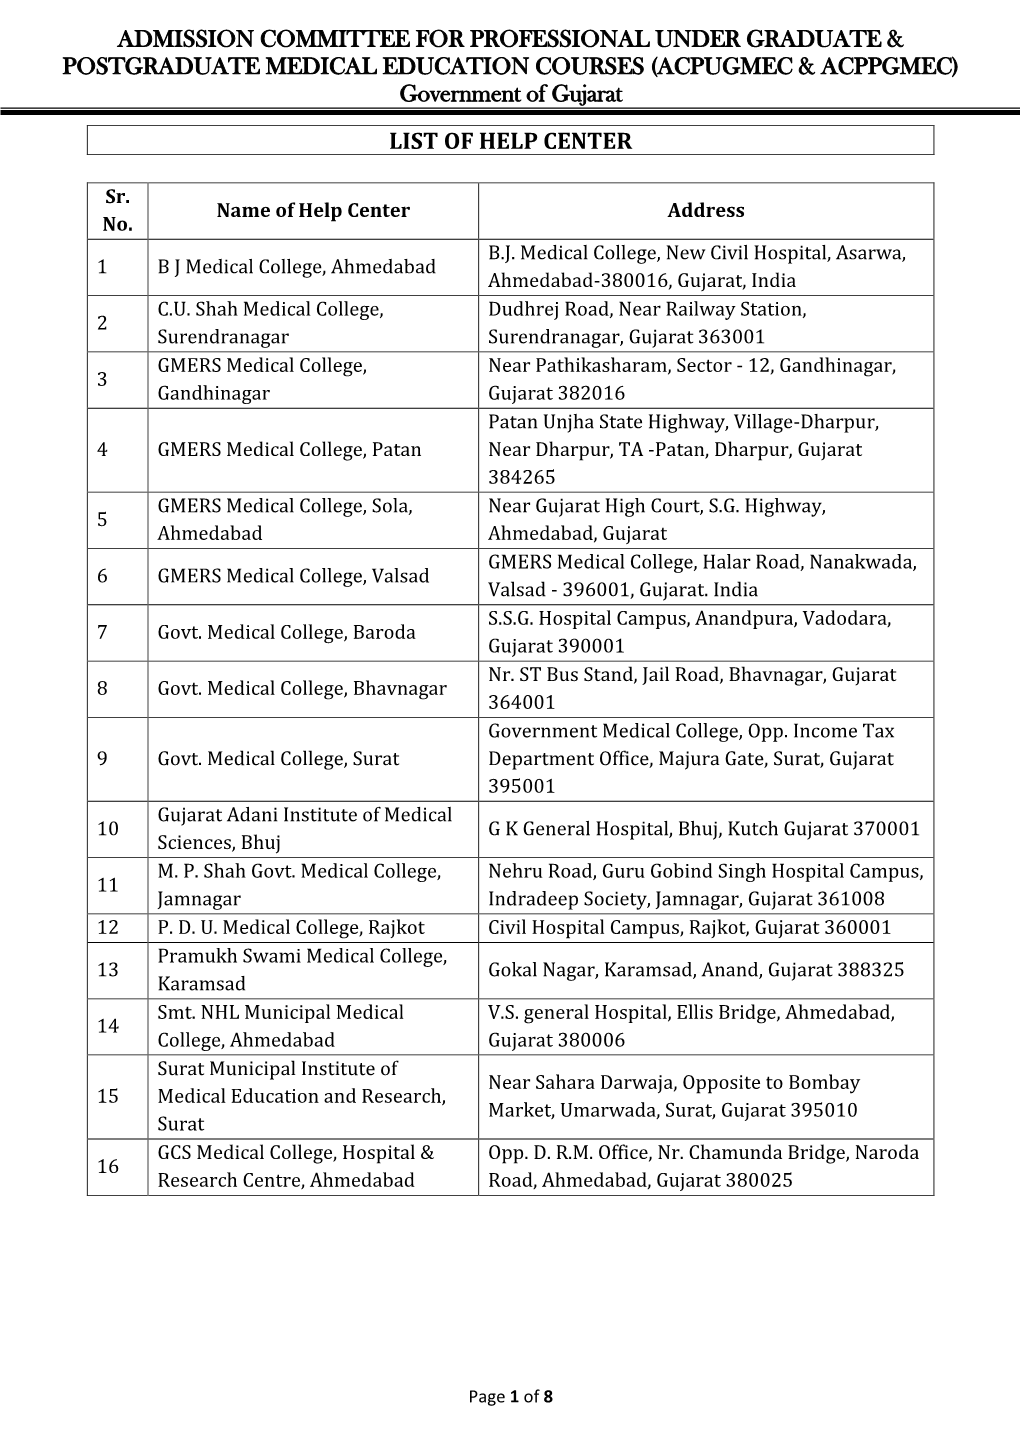 ADMISSION COMMITTEE for PROFESSIONAL UNDER GRADUATE & POSTGRADUATE MEDICAL EDUCATION COURSES (ACPUGMEC & ACPPGMEC) Government of Gujarat